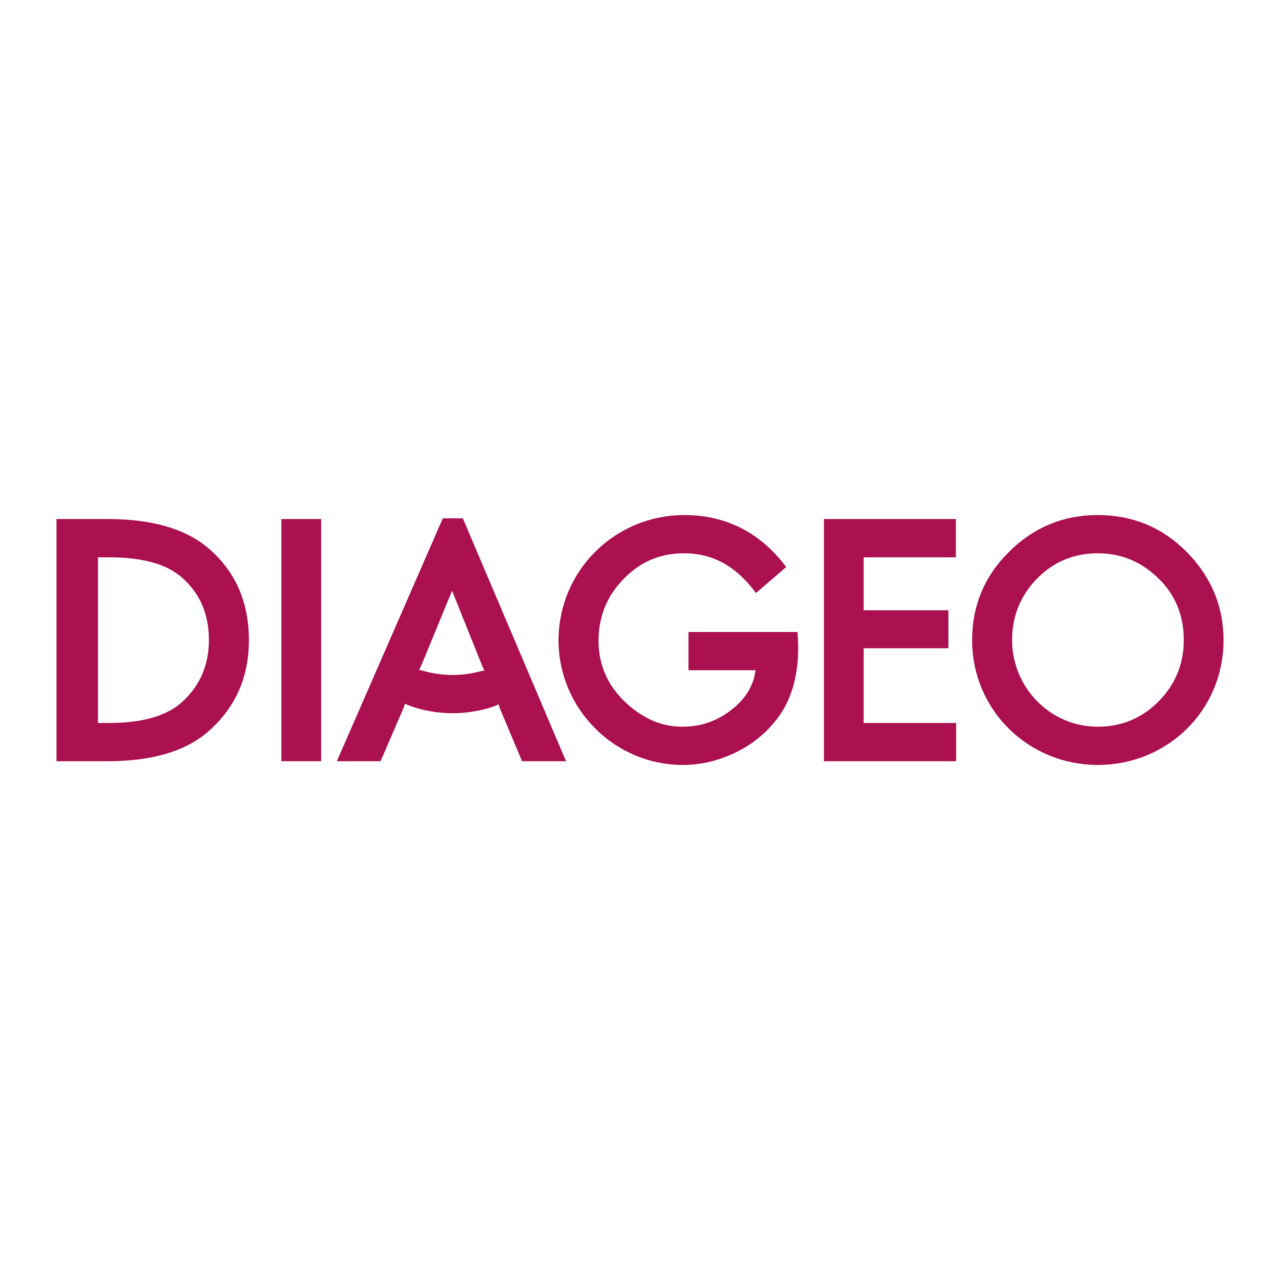     Diageo plc.